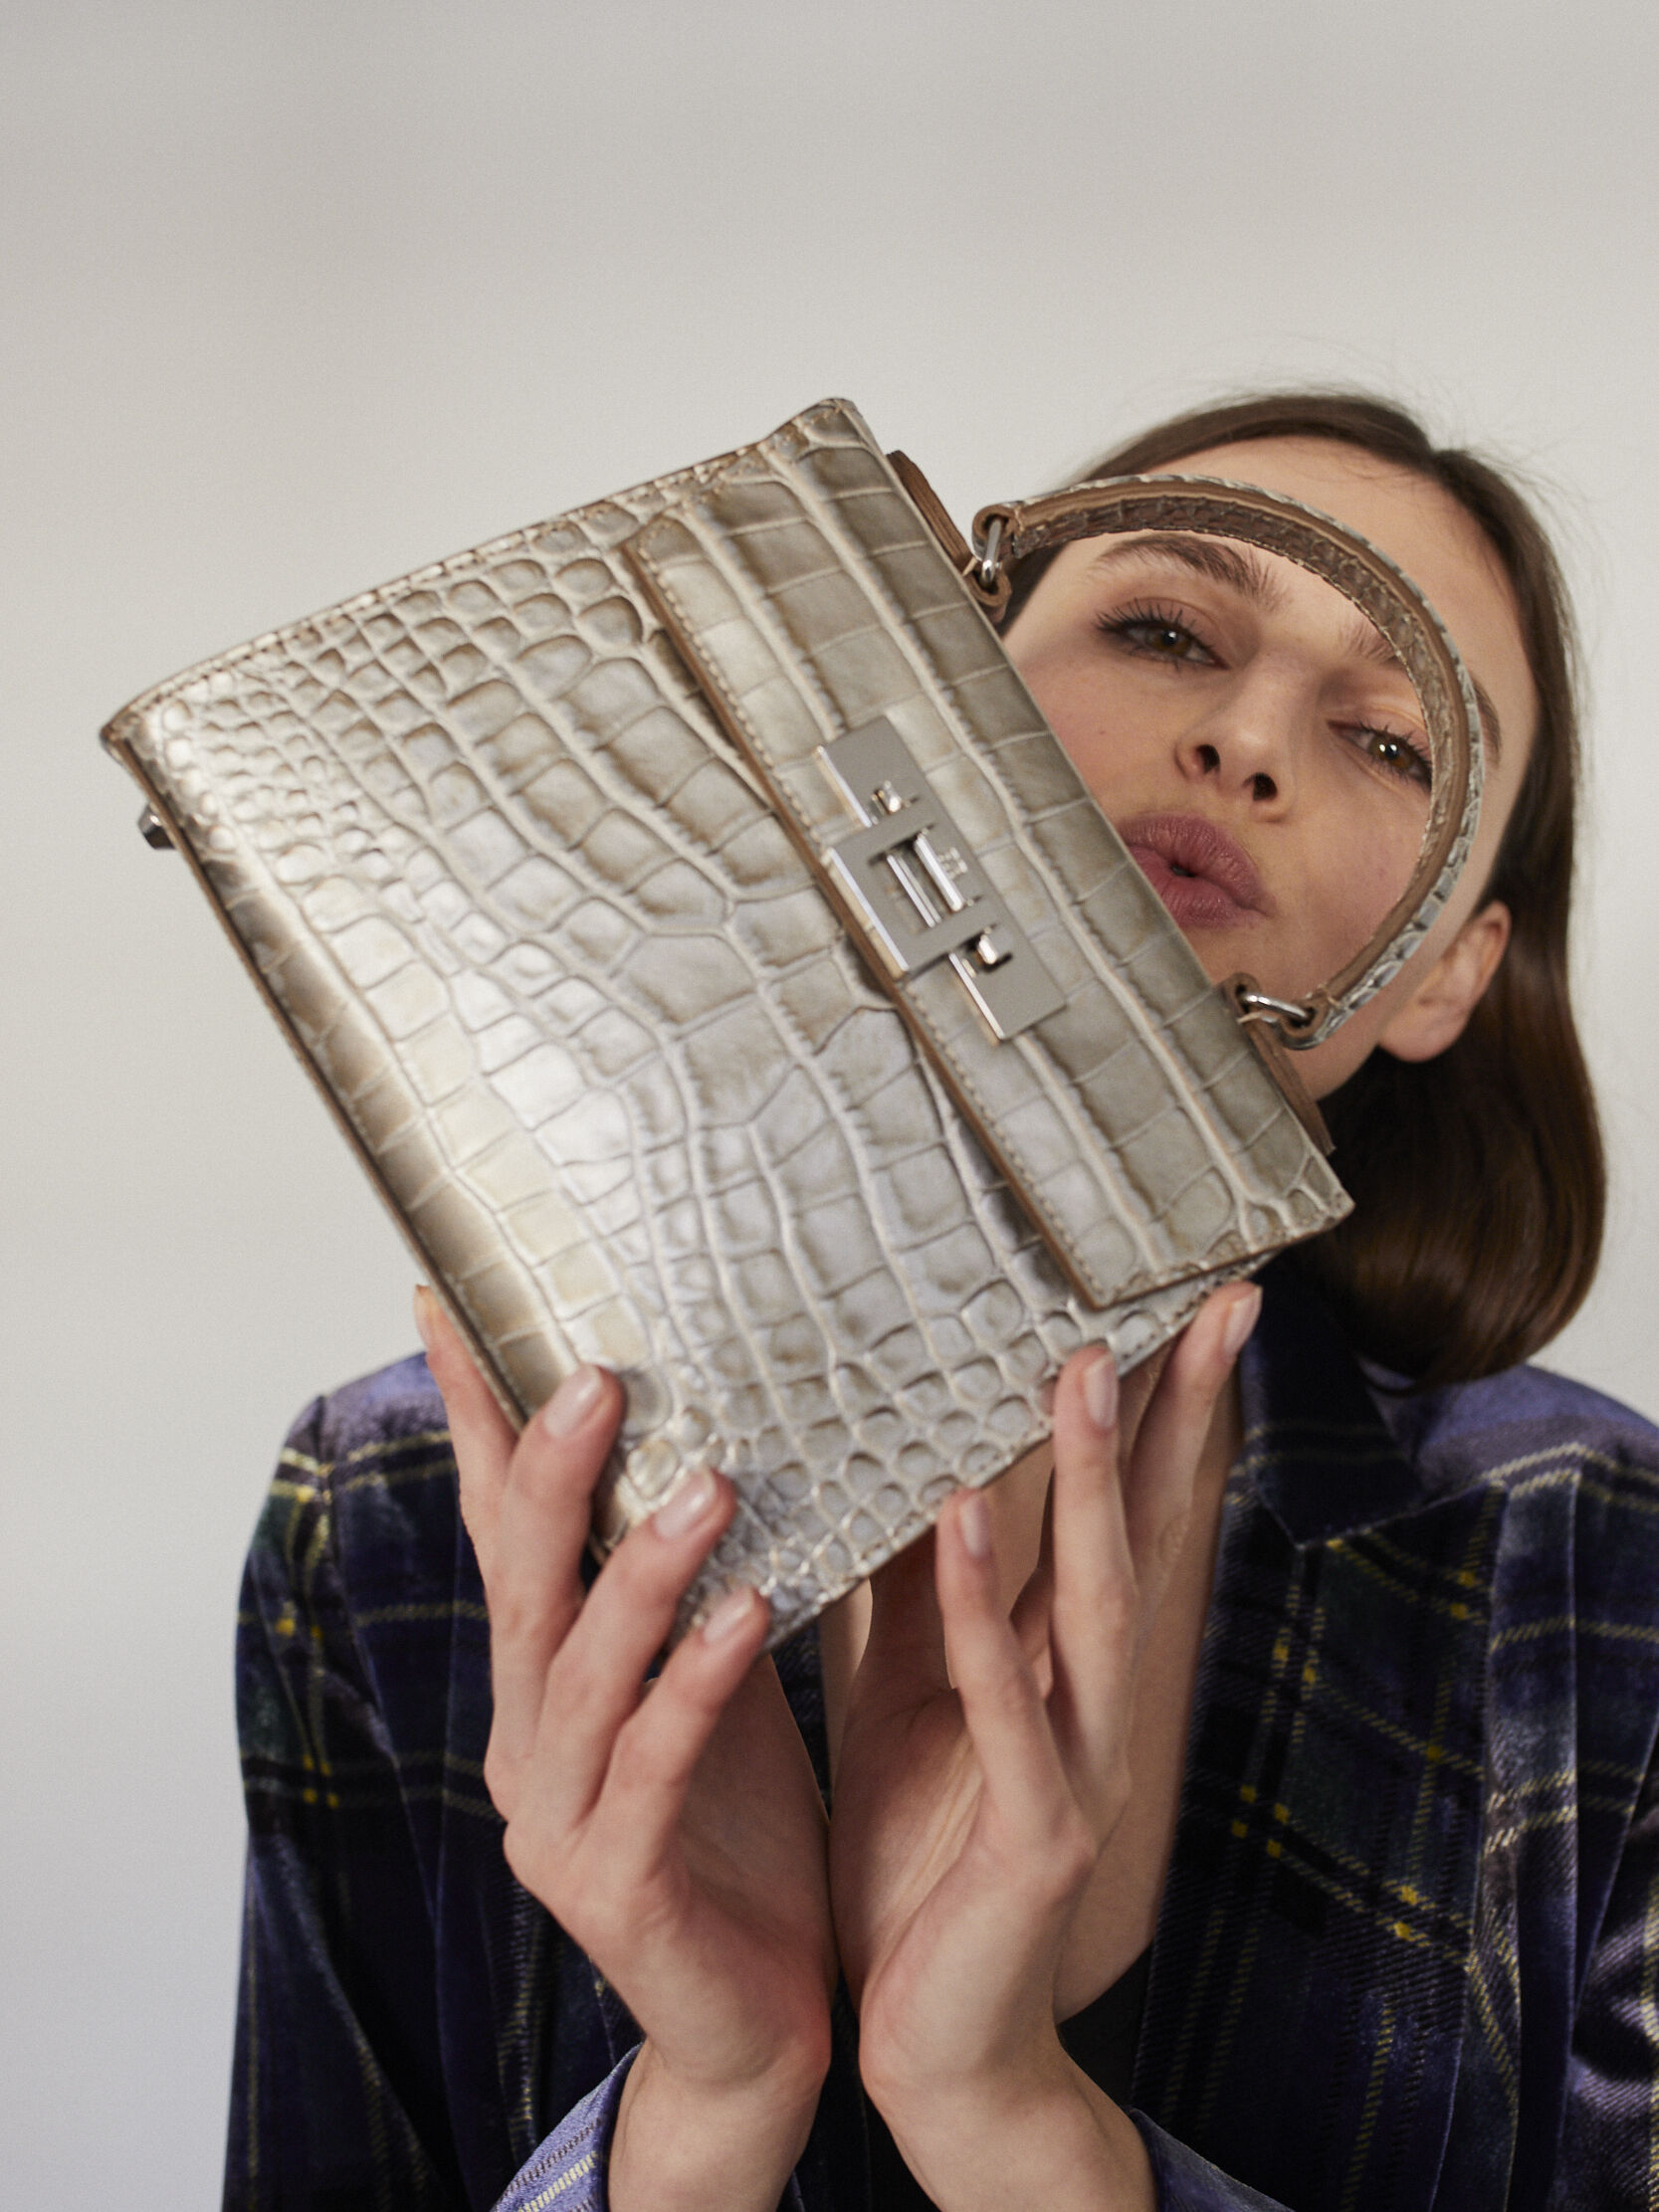 Fonteyn Midi Orinoco 'Croc' Print Calf Leather Handbag - Silver